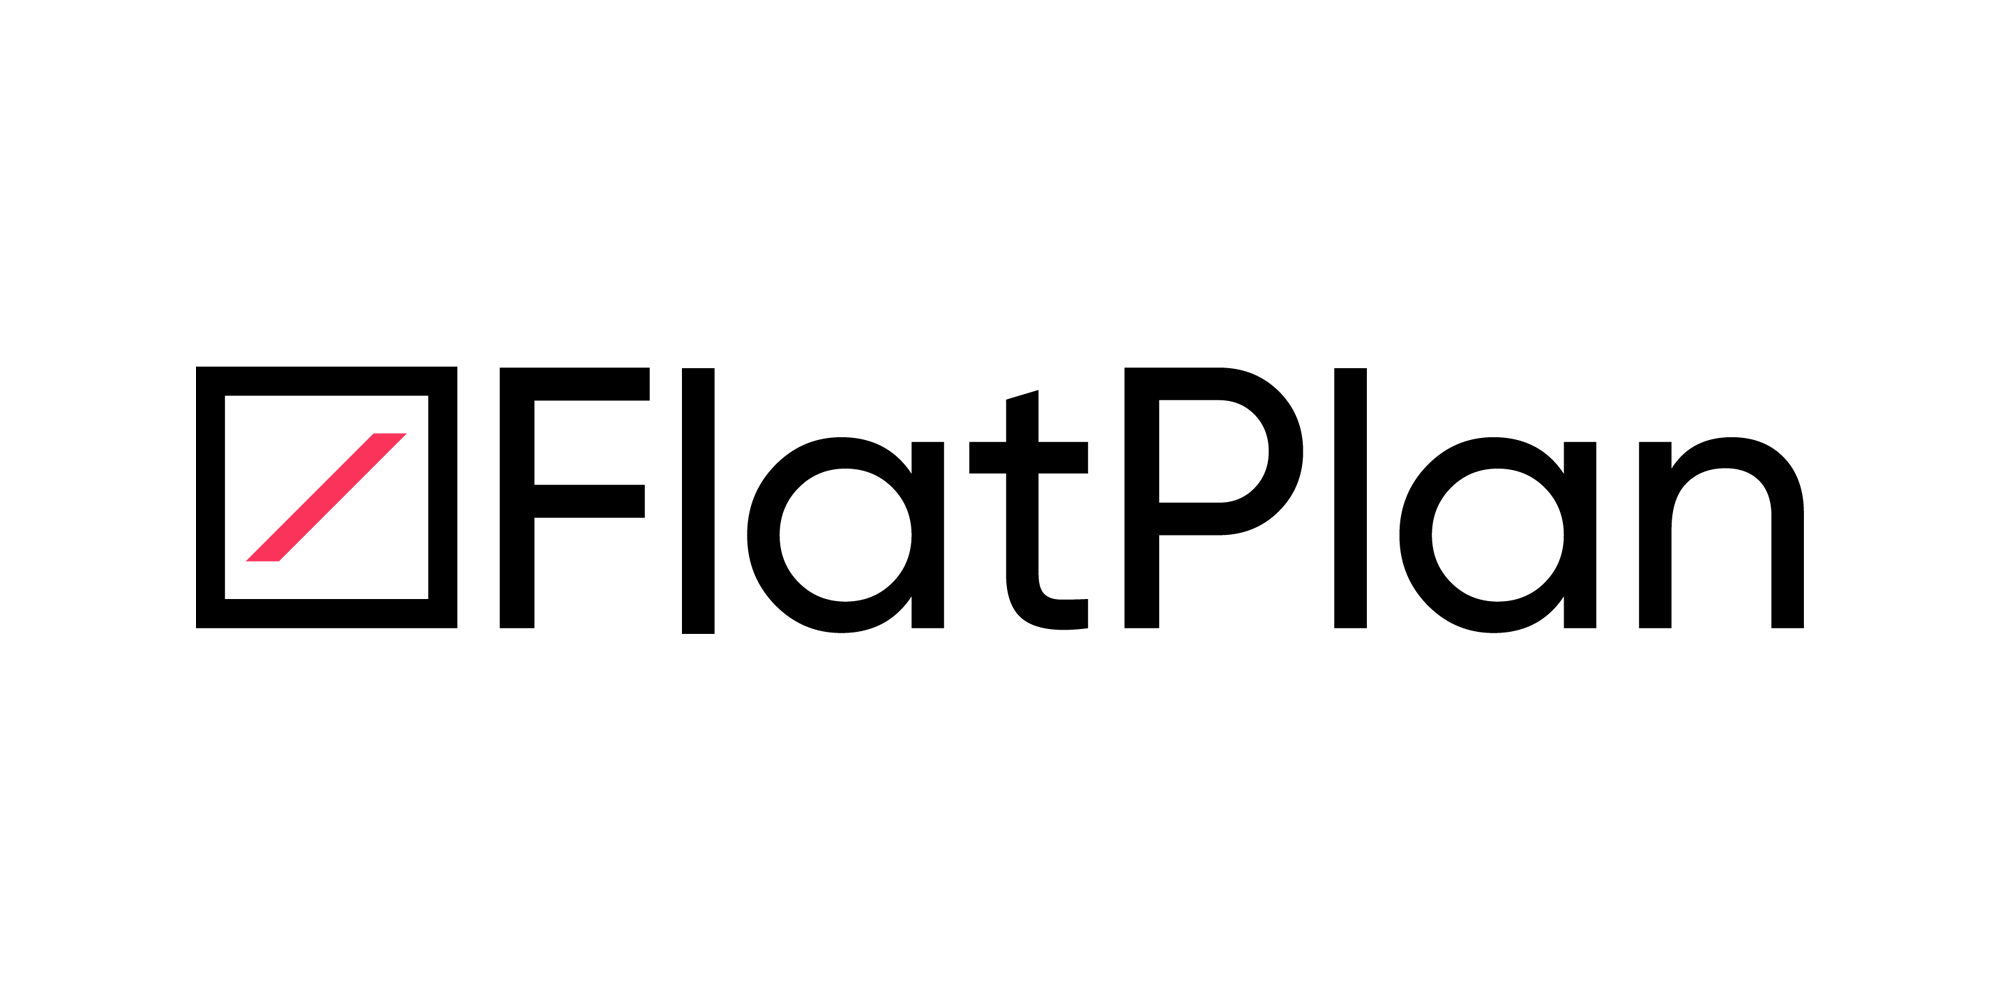 FlatPlan